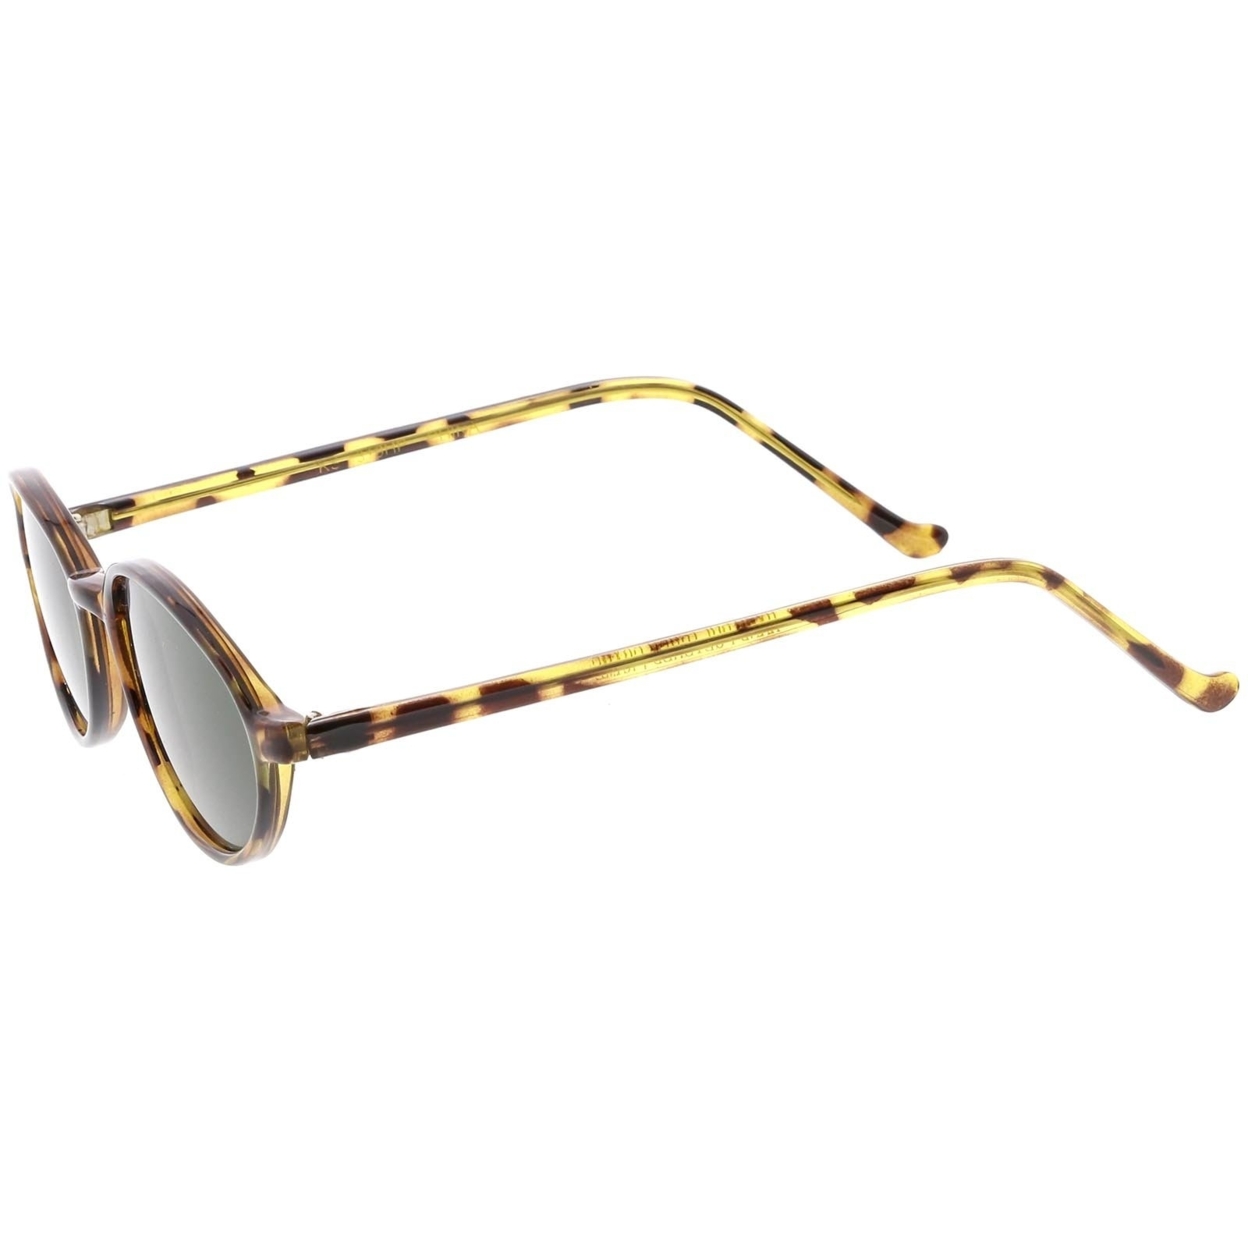 True Vintage Oval Sunglasses Slim Arms Neutral Colored Round Lens 49mm - Orange Tortoise / Smoke